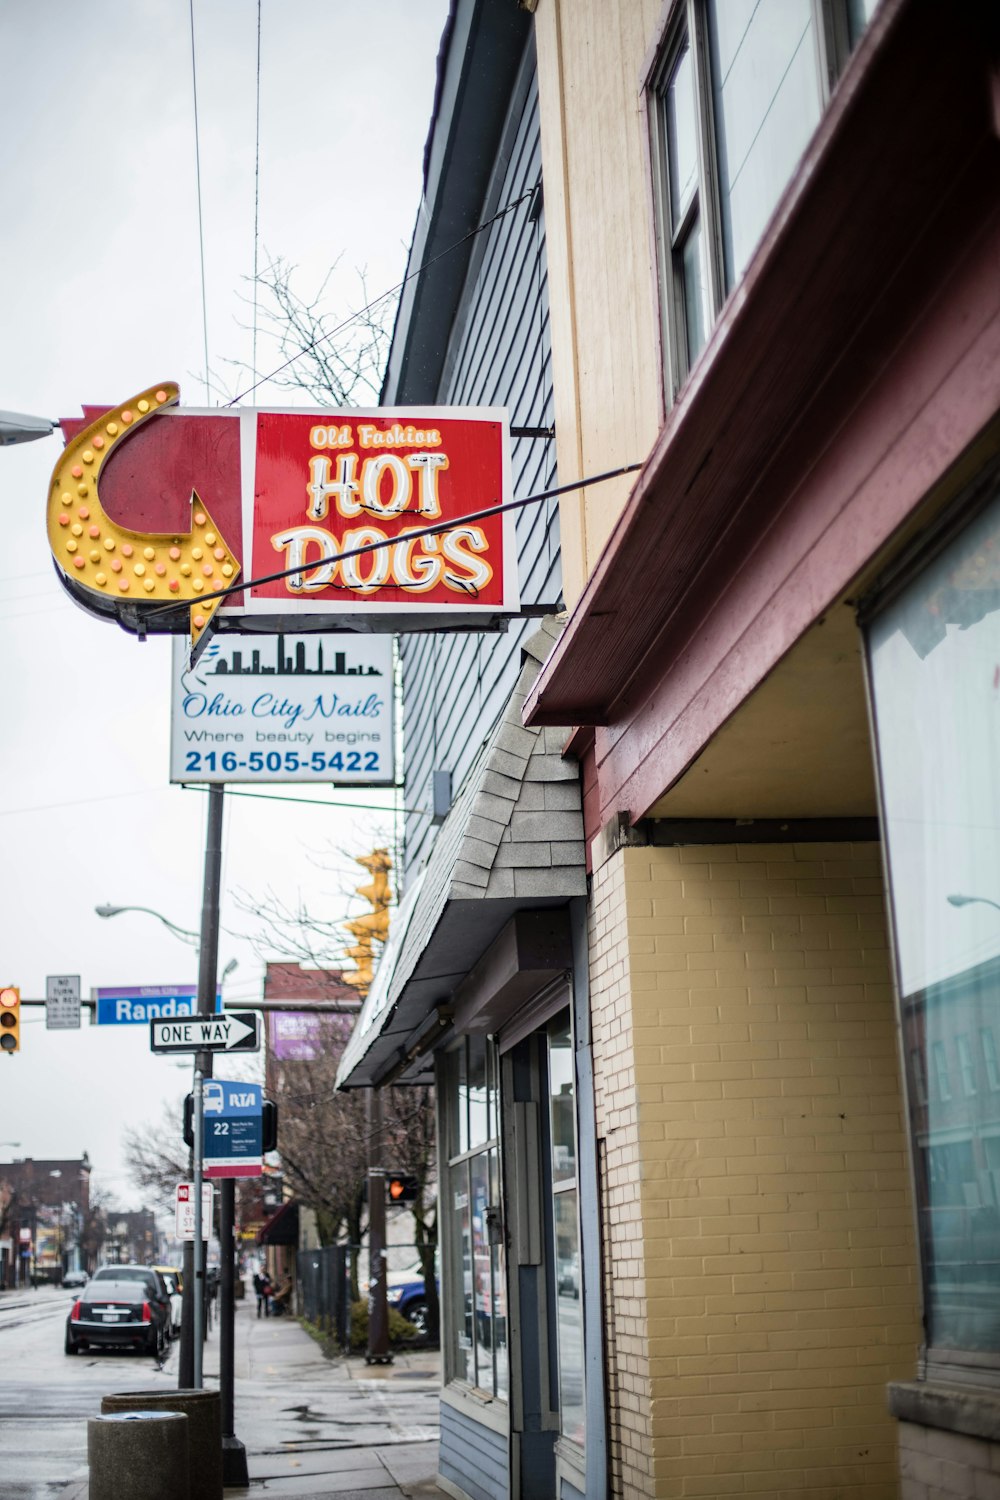 Hot Dogs signage